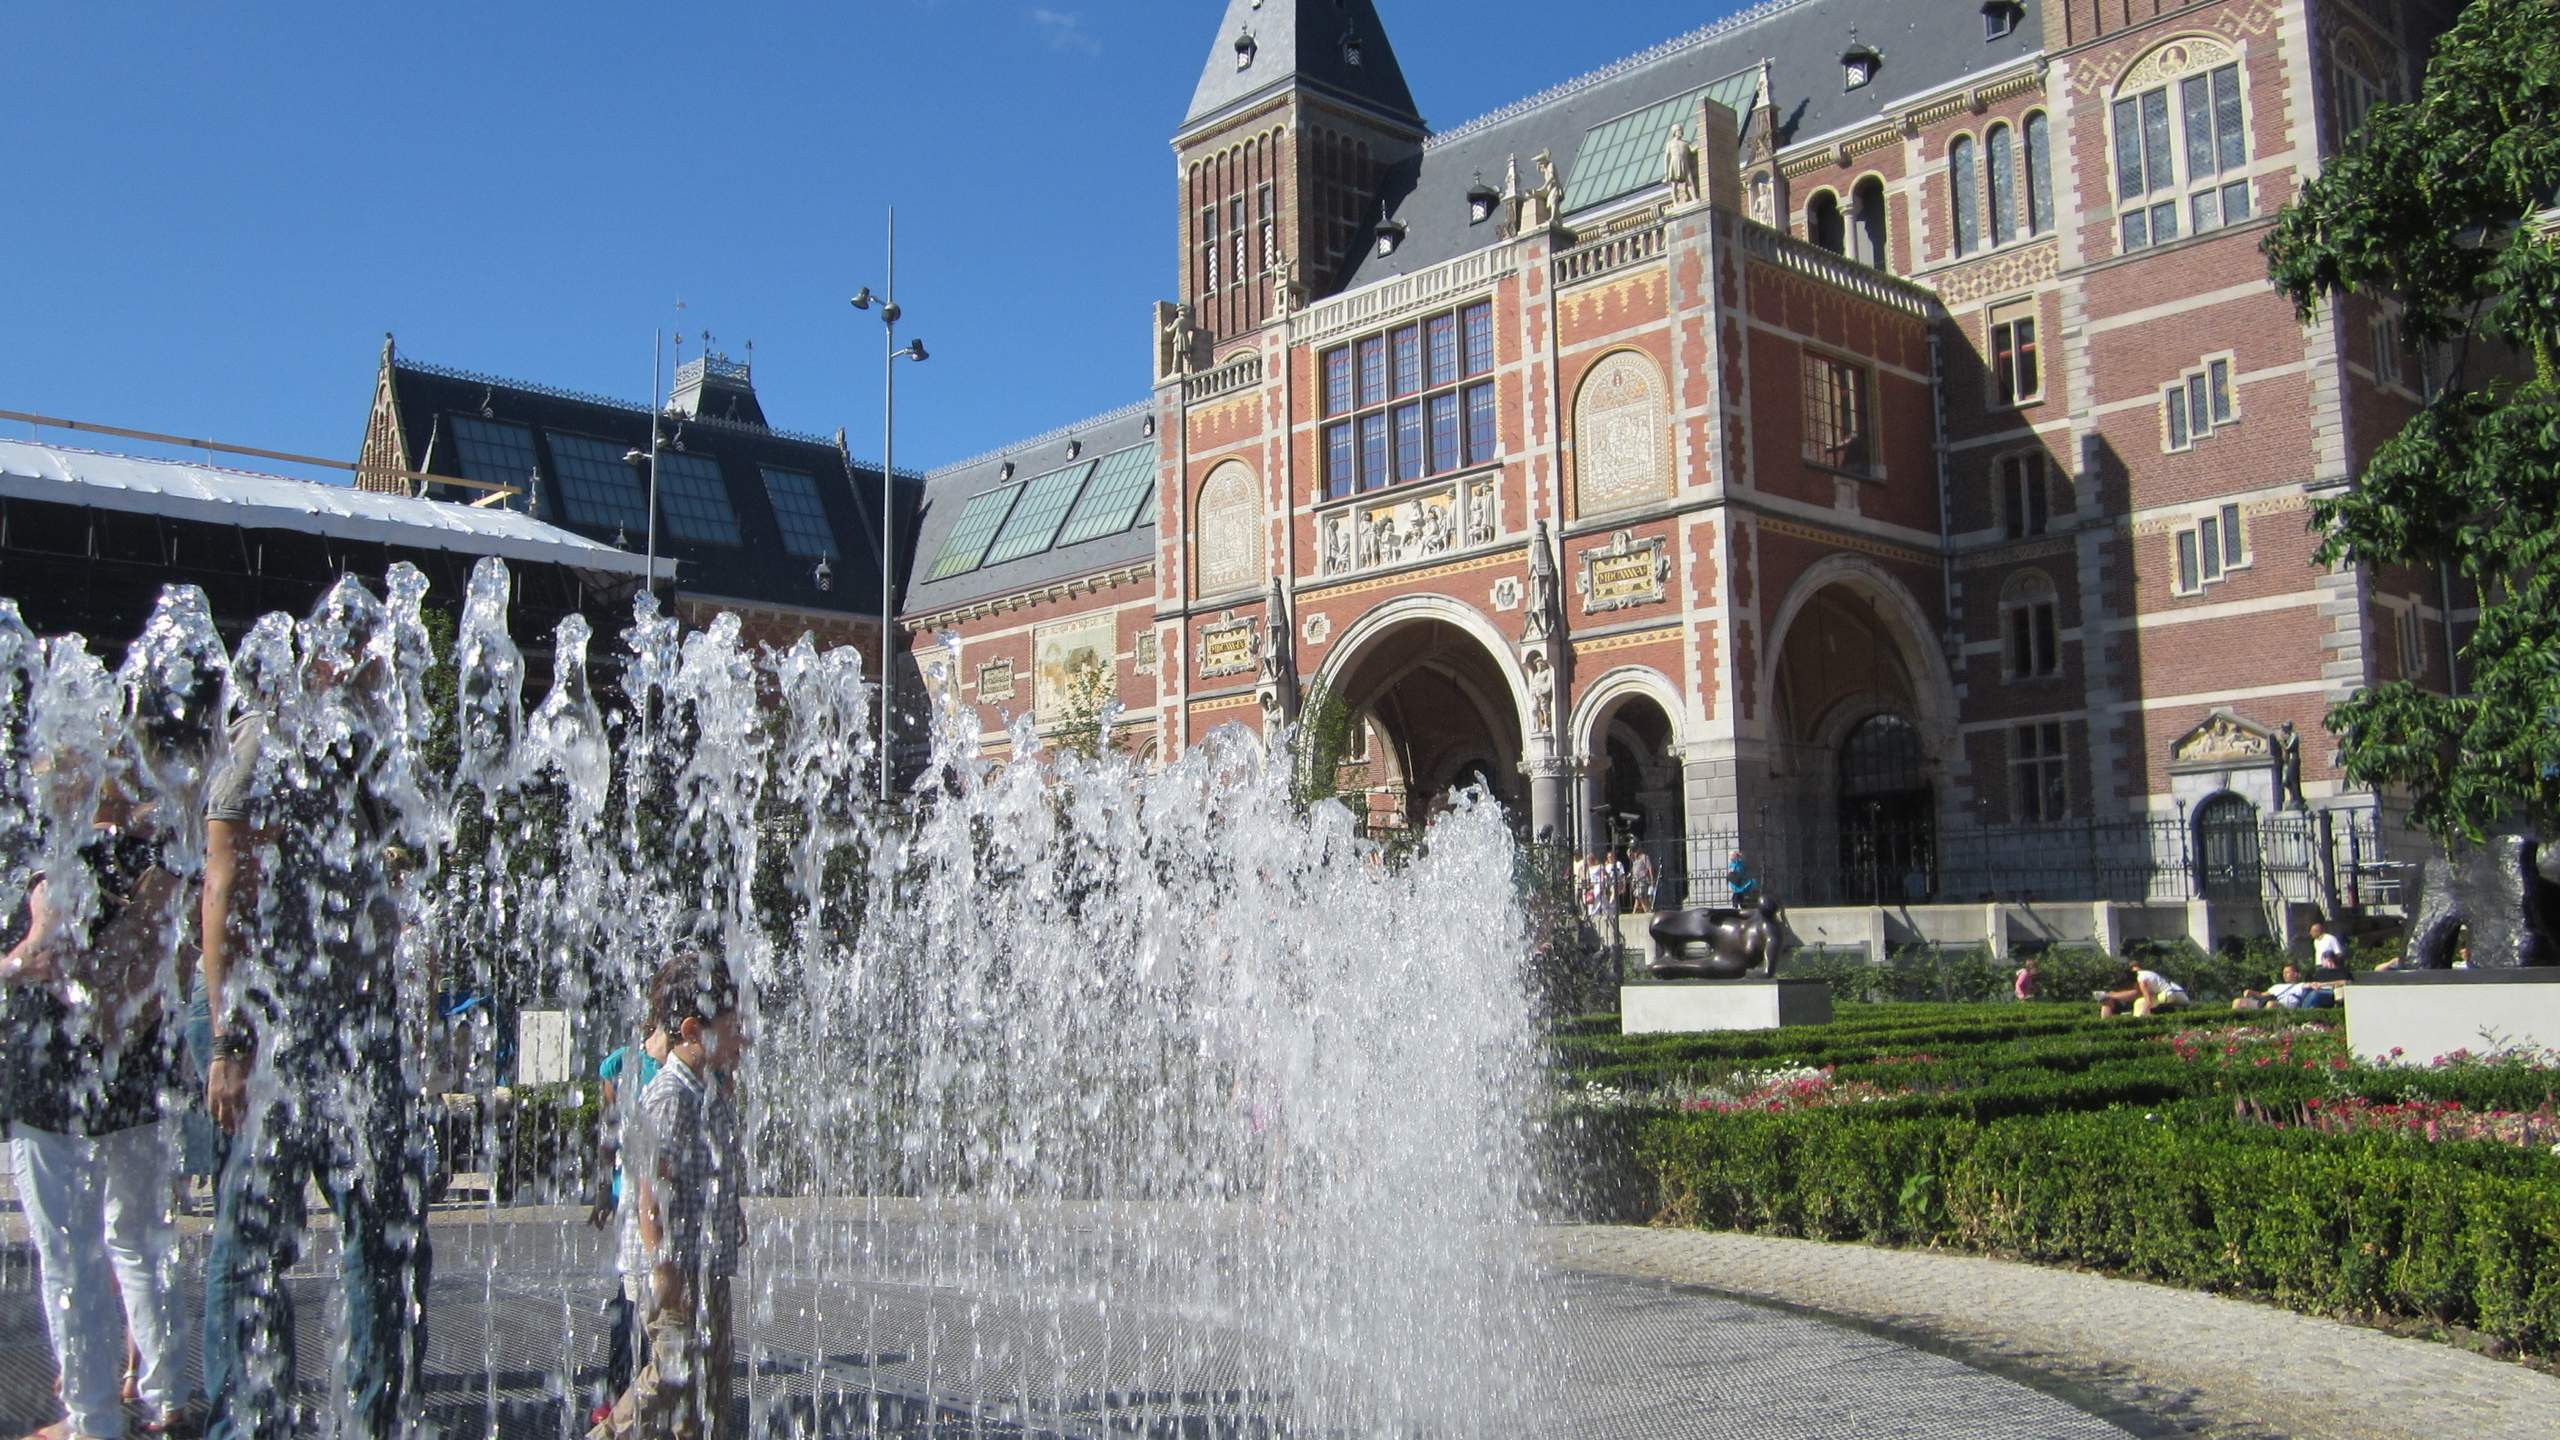 Kids were enjoying running through the shooting fountain outside the Rijksmuseum.